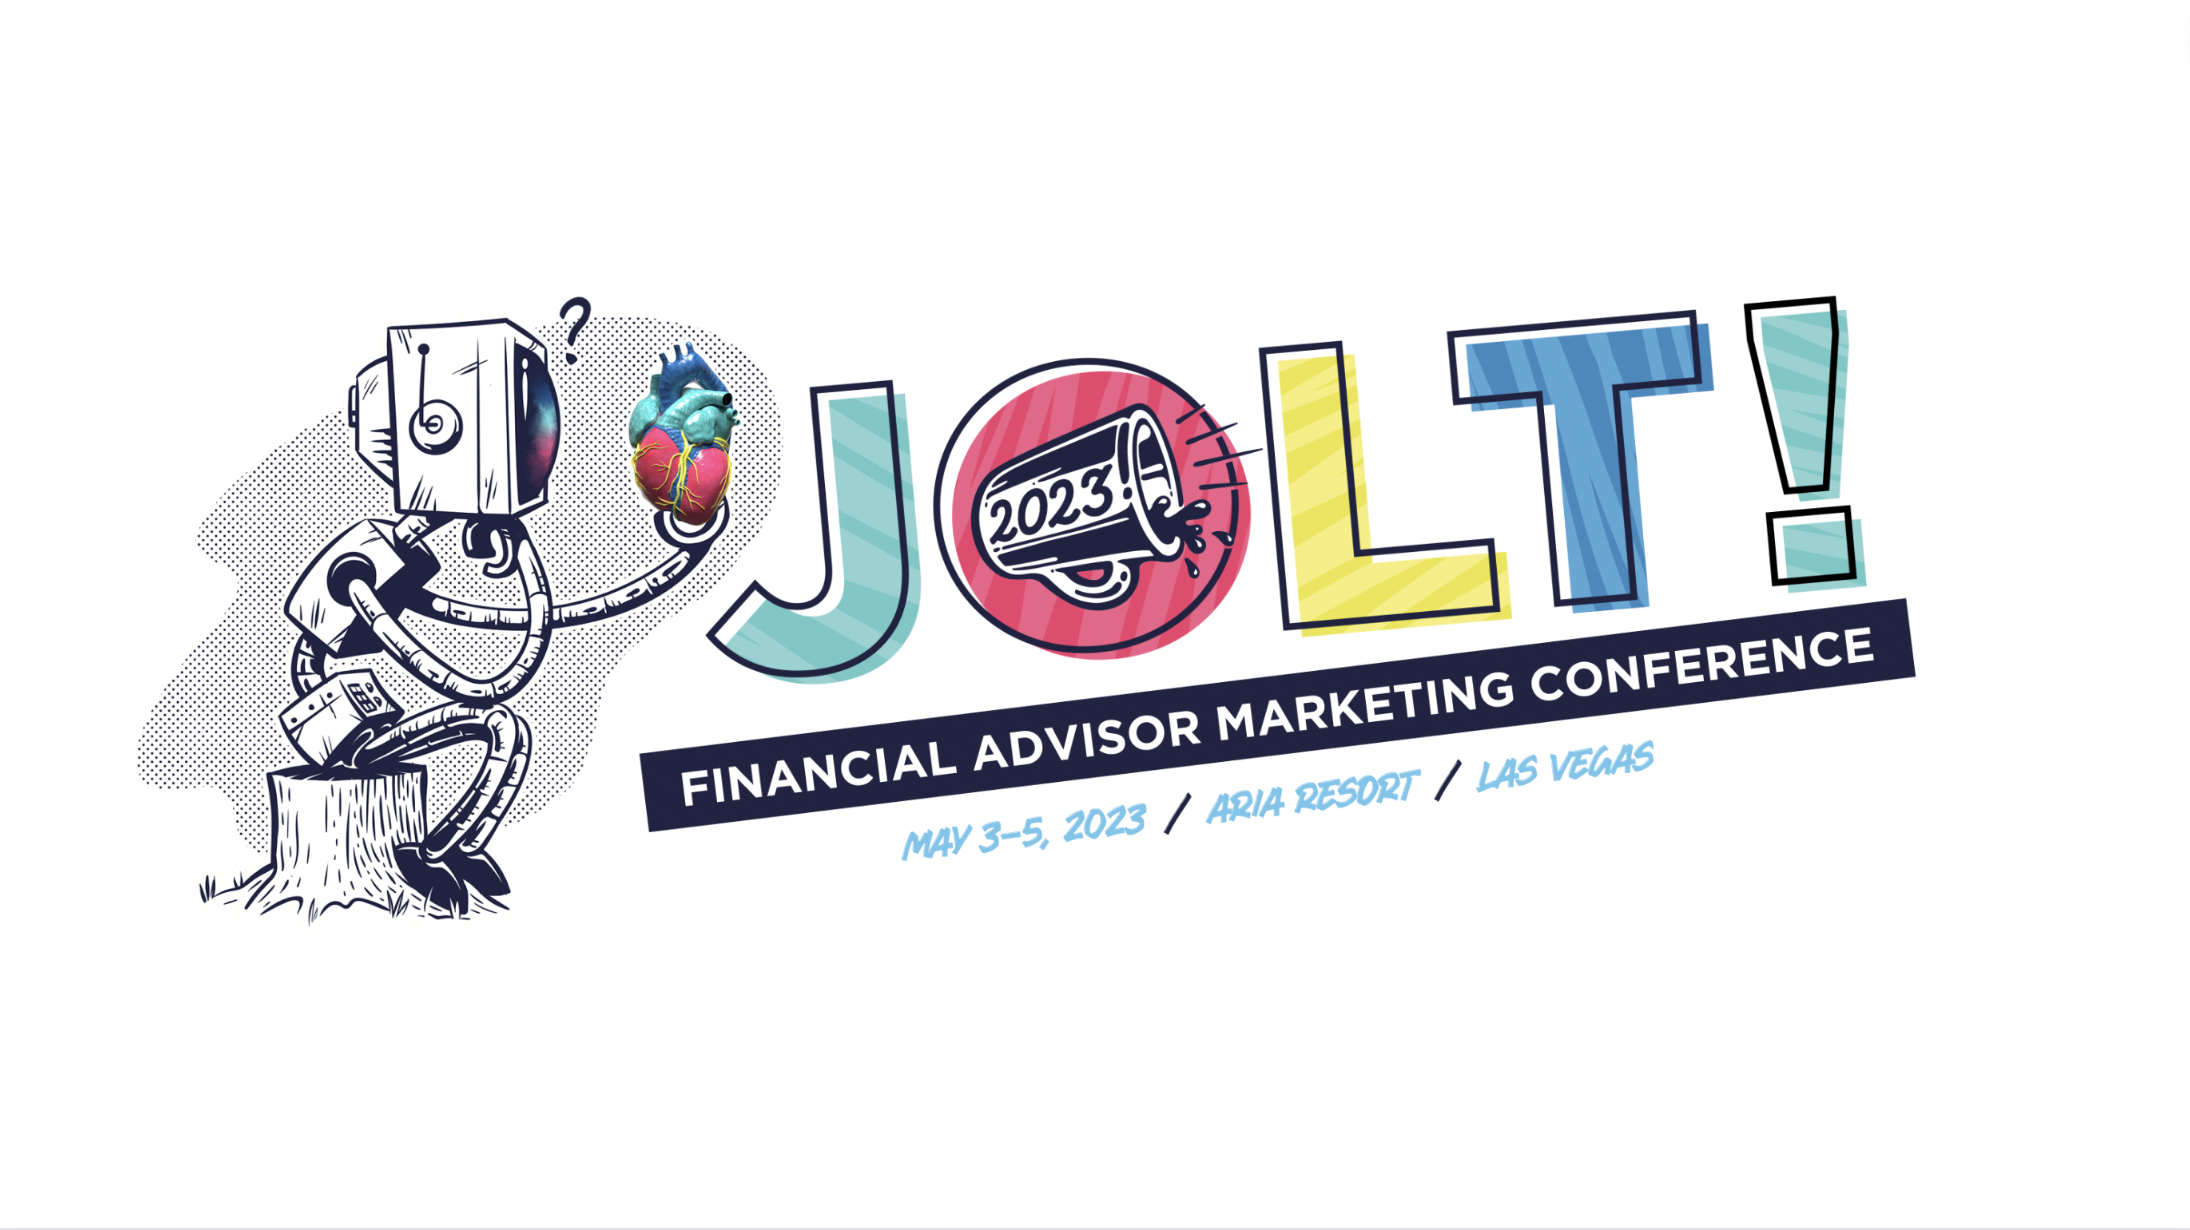 [NEWS] Snappy Kraken’s Jolt! Conference Returns to Reinvigorate Financial Advisor Marketing